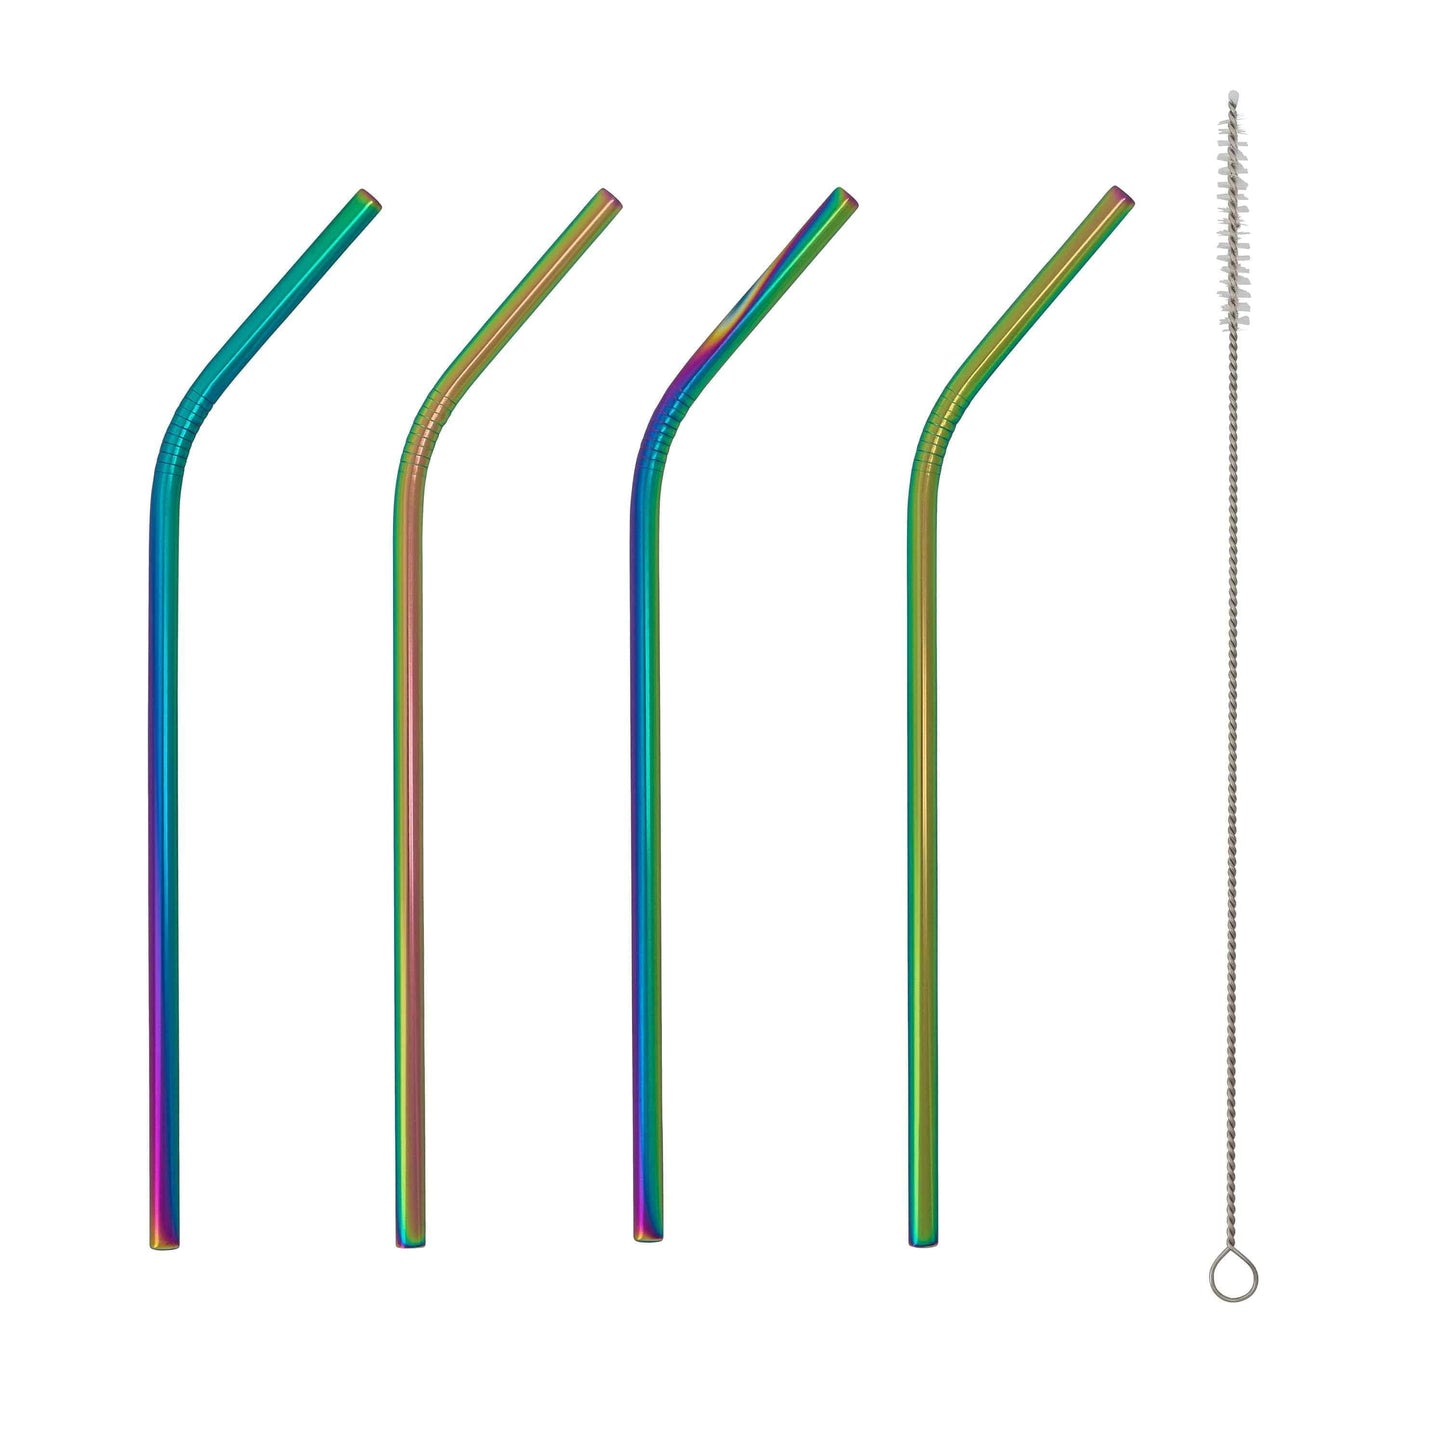 Seoul Straw - Nordic Side - __tab1:handle-care, bis-hidden, dining, straws, utensils